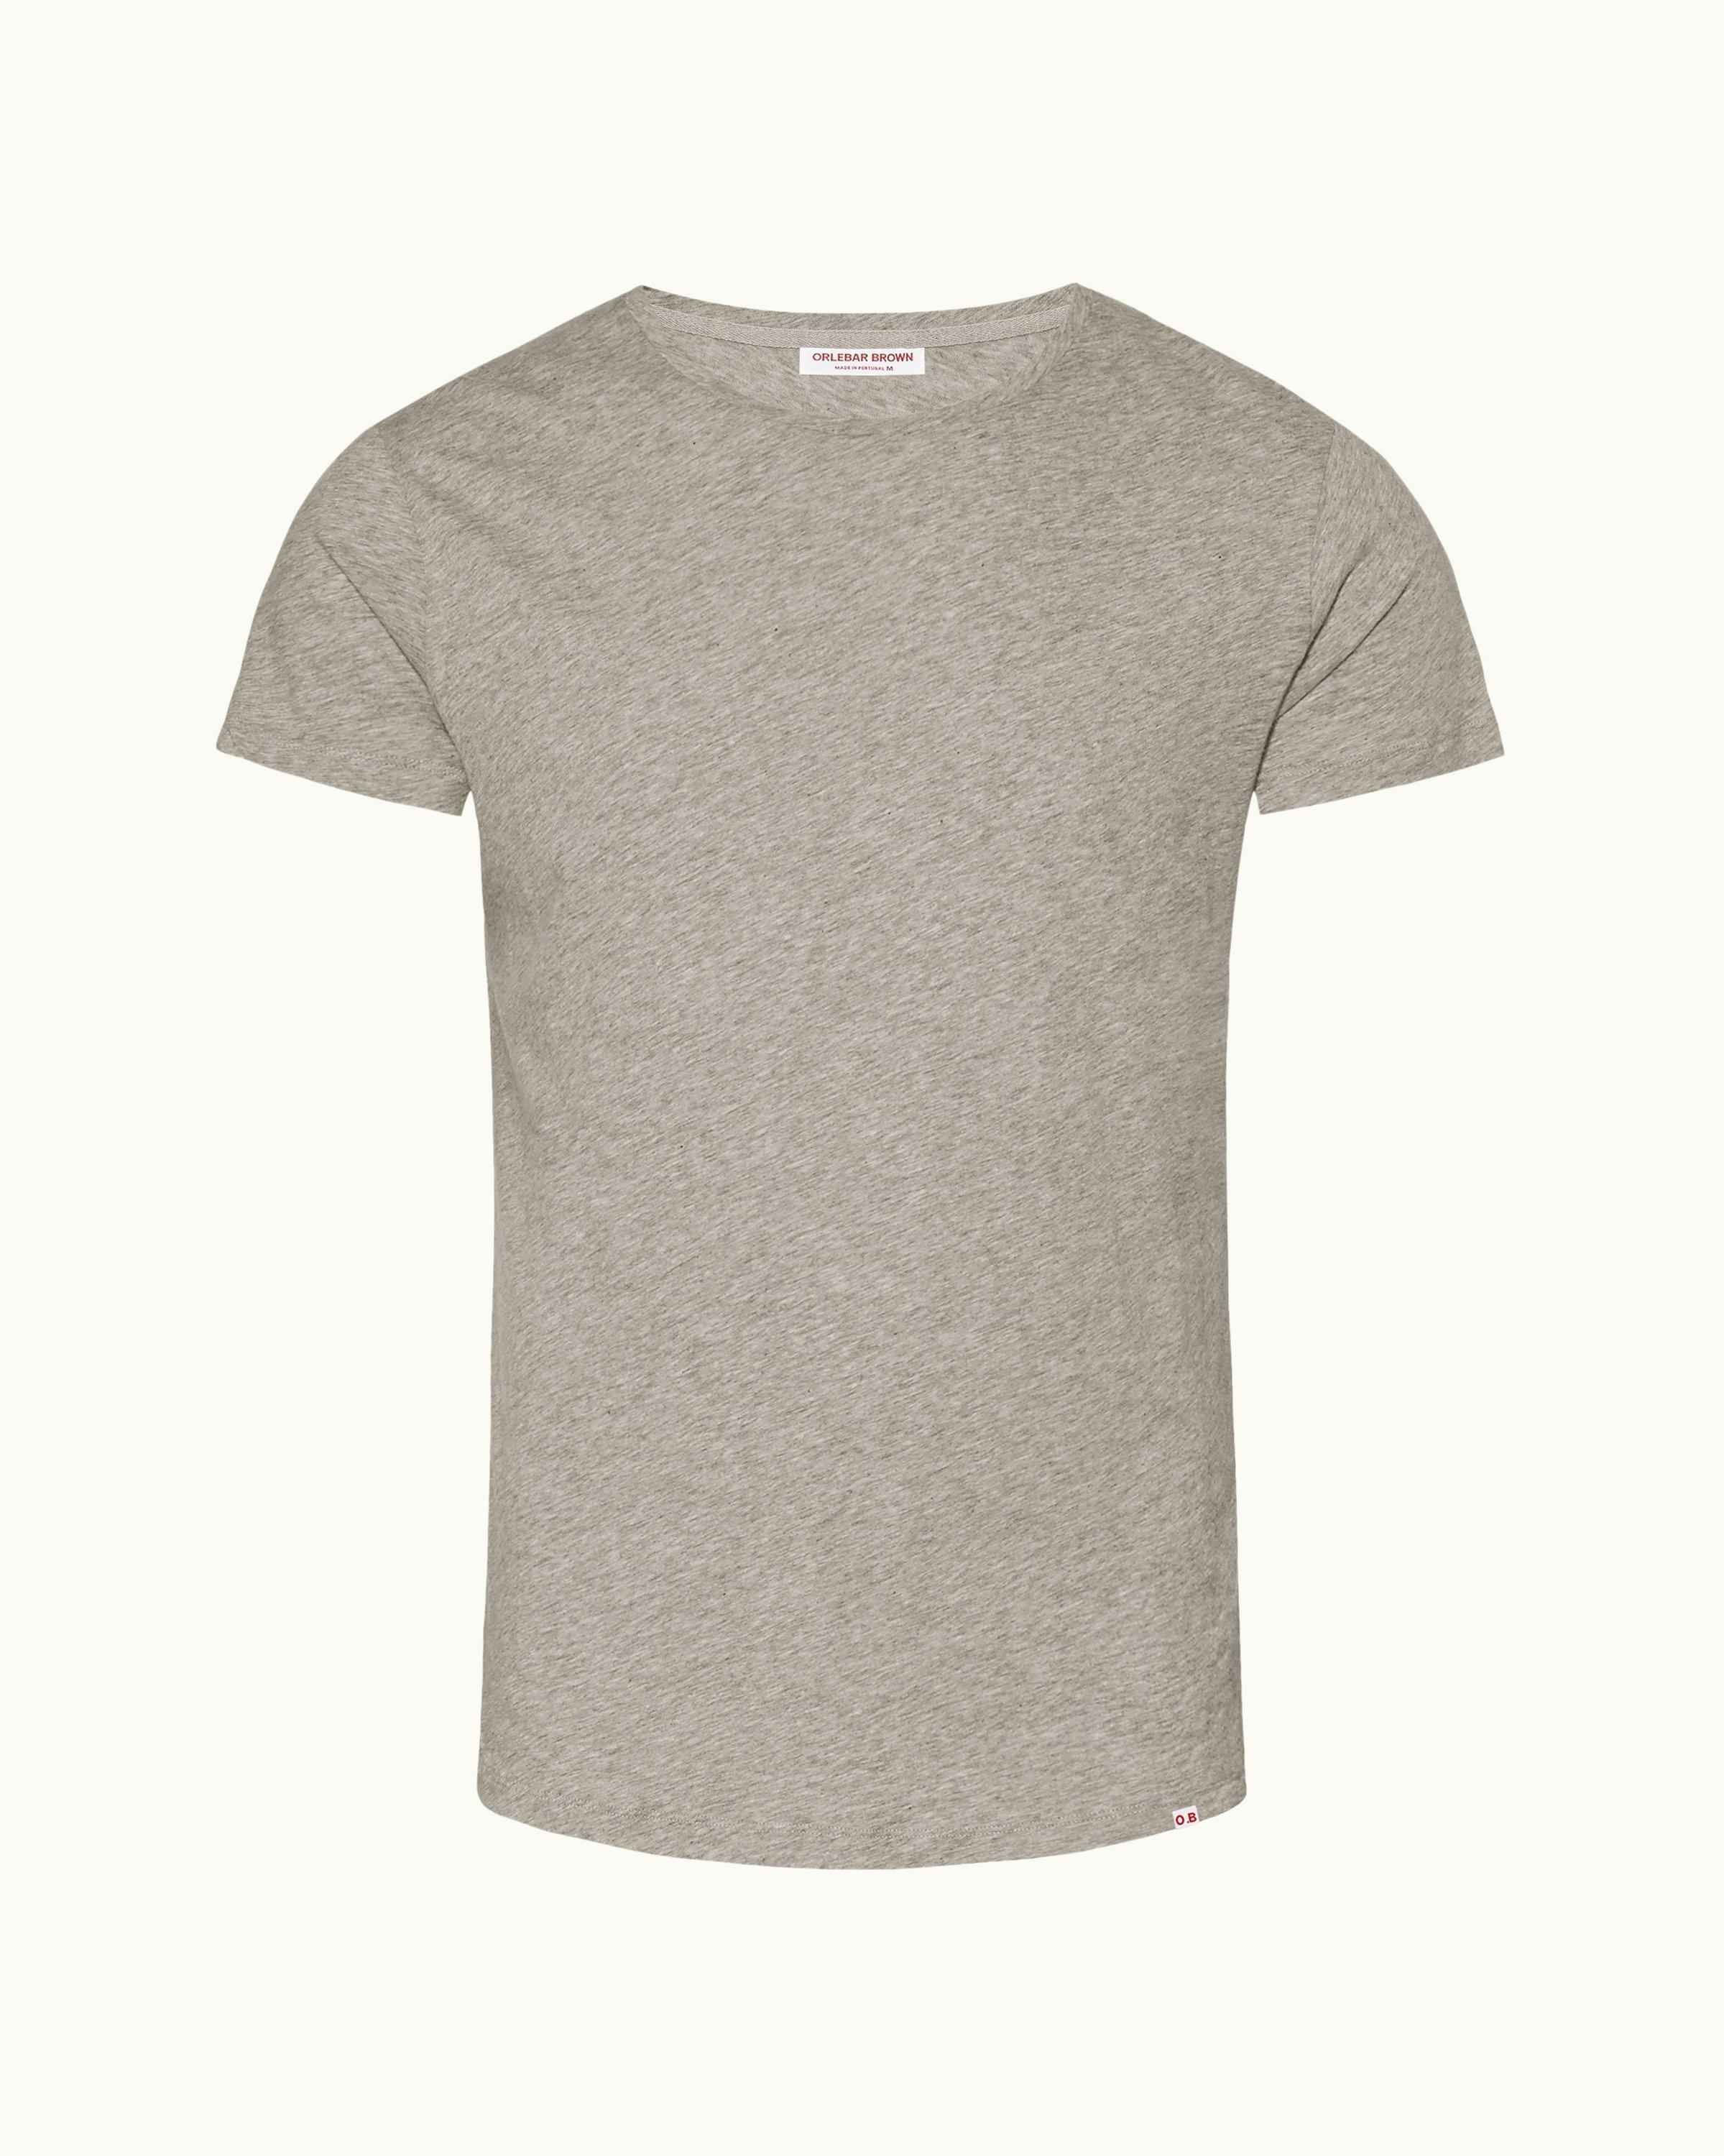 OB-T - Grey Melange Tailored Fit Crew Neck T-Shirt | Orlebar